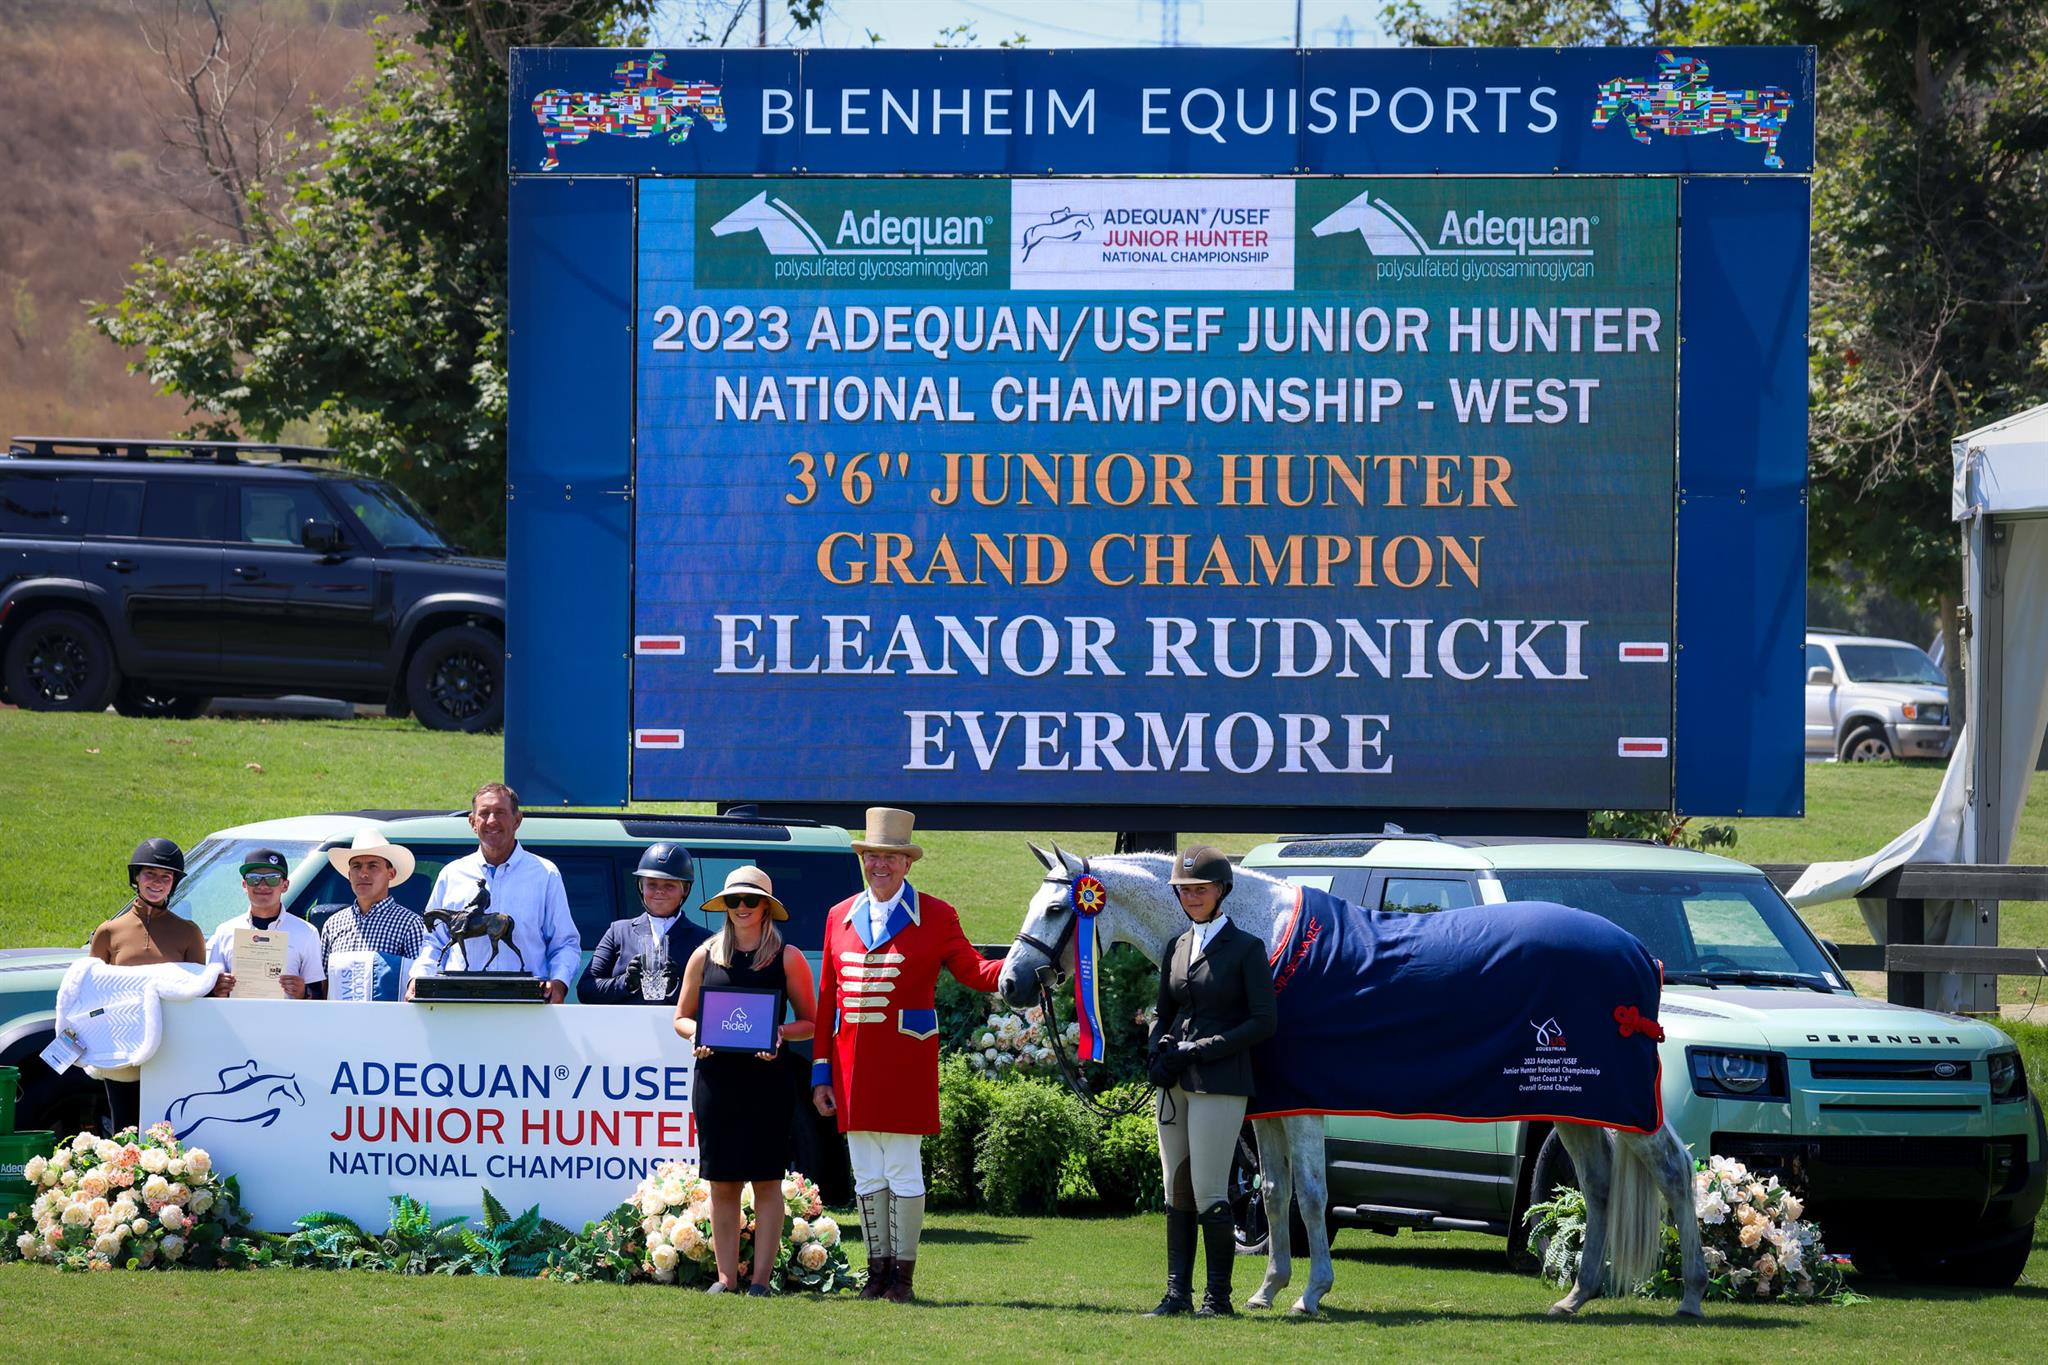 Photo showcasing the Adequan®/USEF Junior Hunter National Championship- West